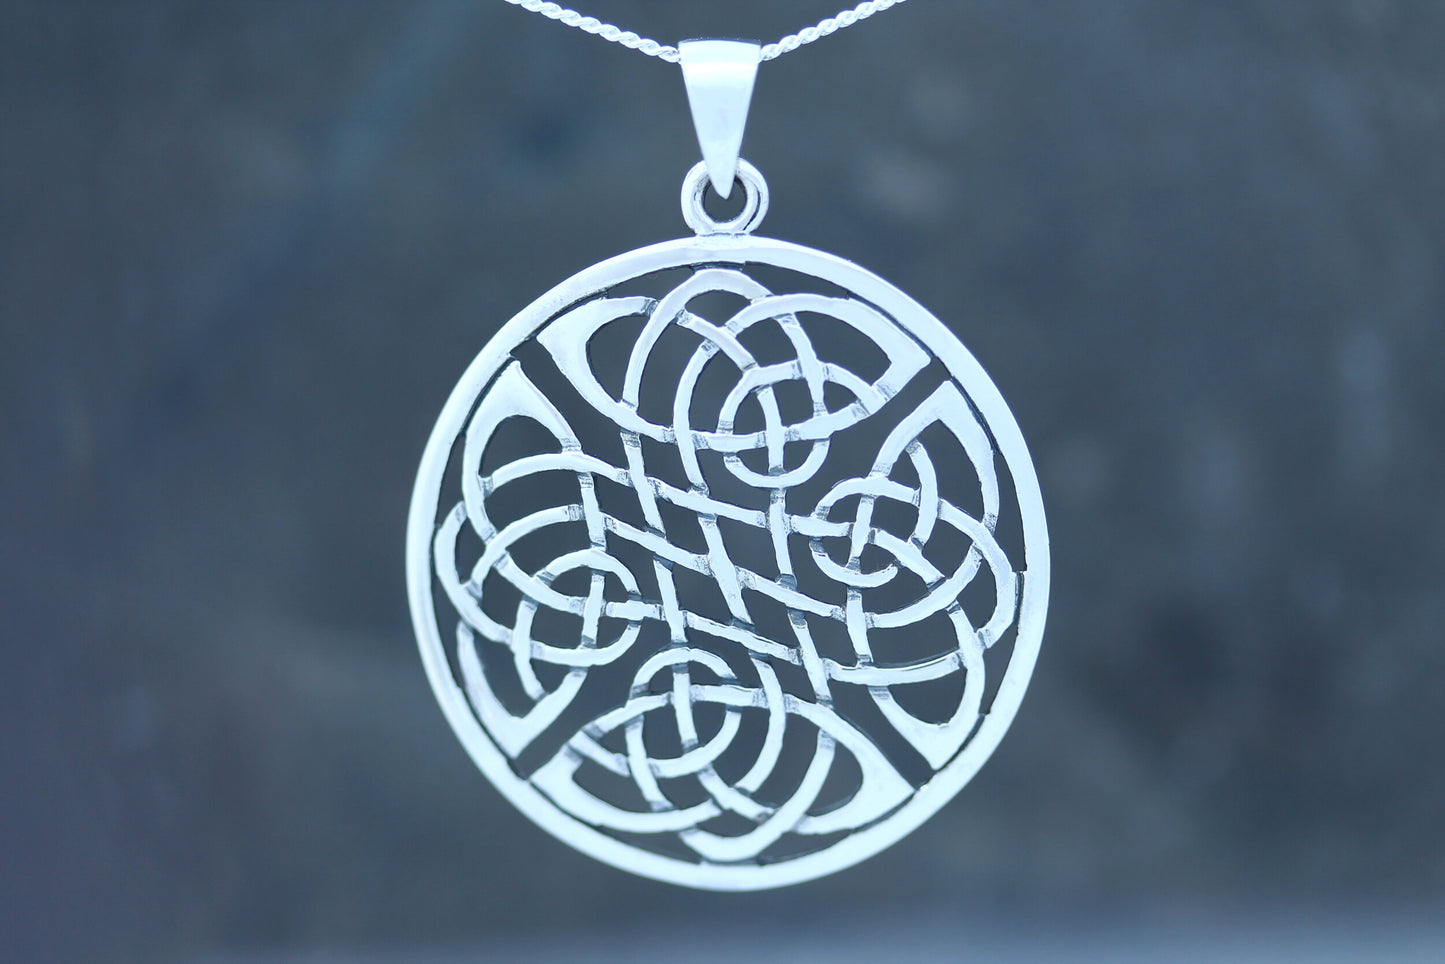 Solvar 14K Gold Diamond & Emerald Celtic Knot Pendant w/ Chain - QVC.com